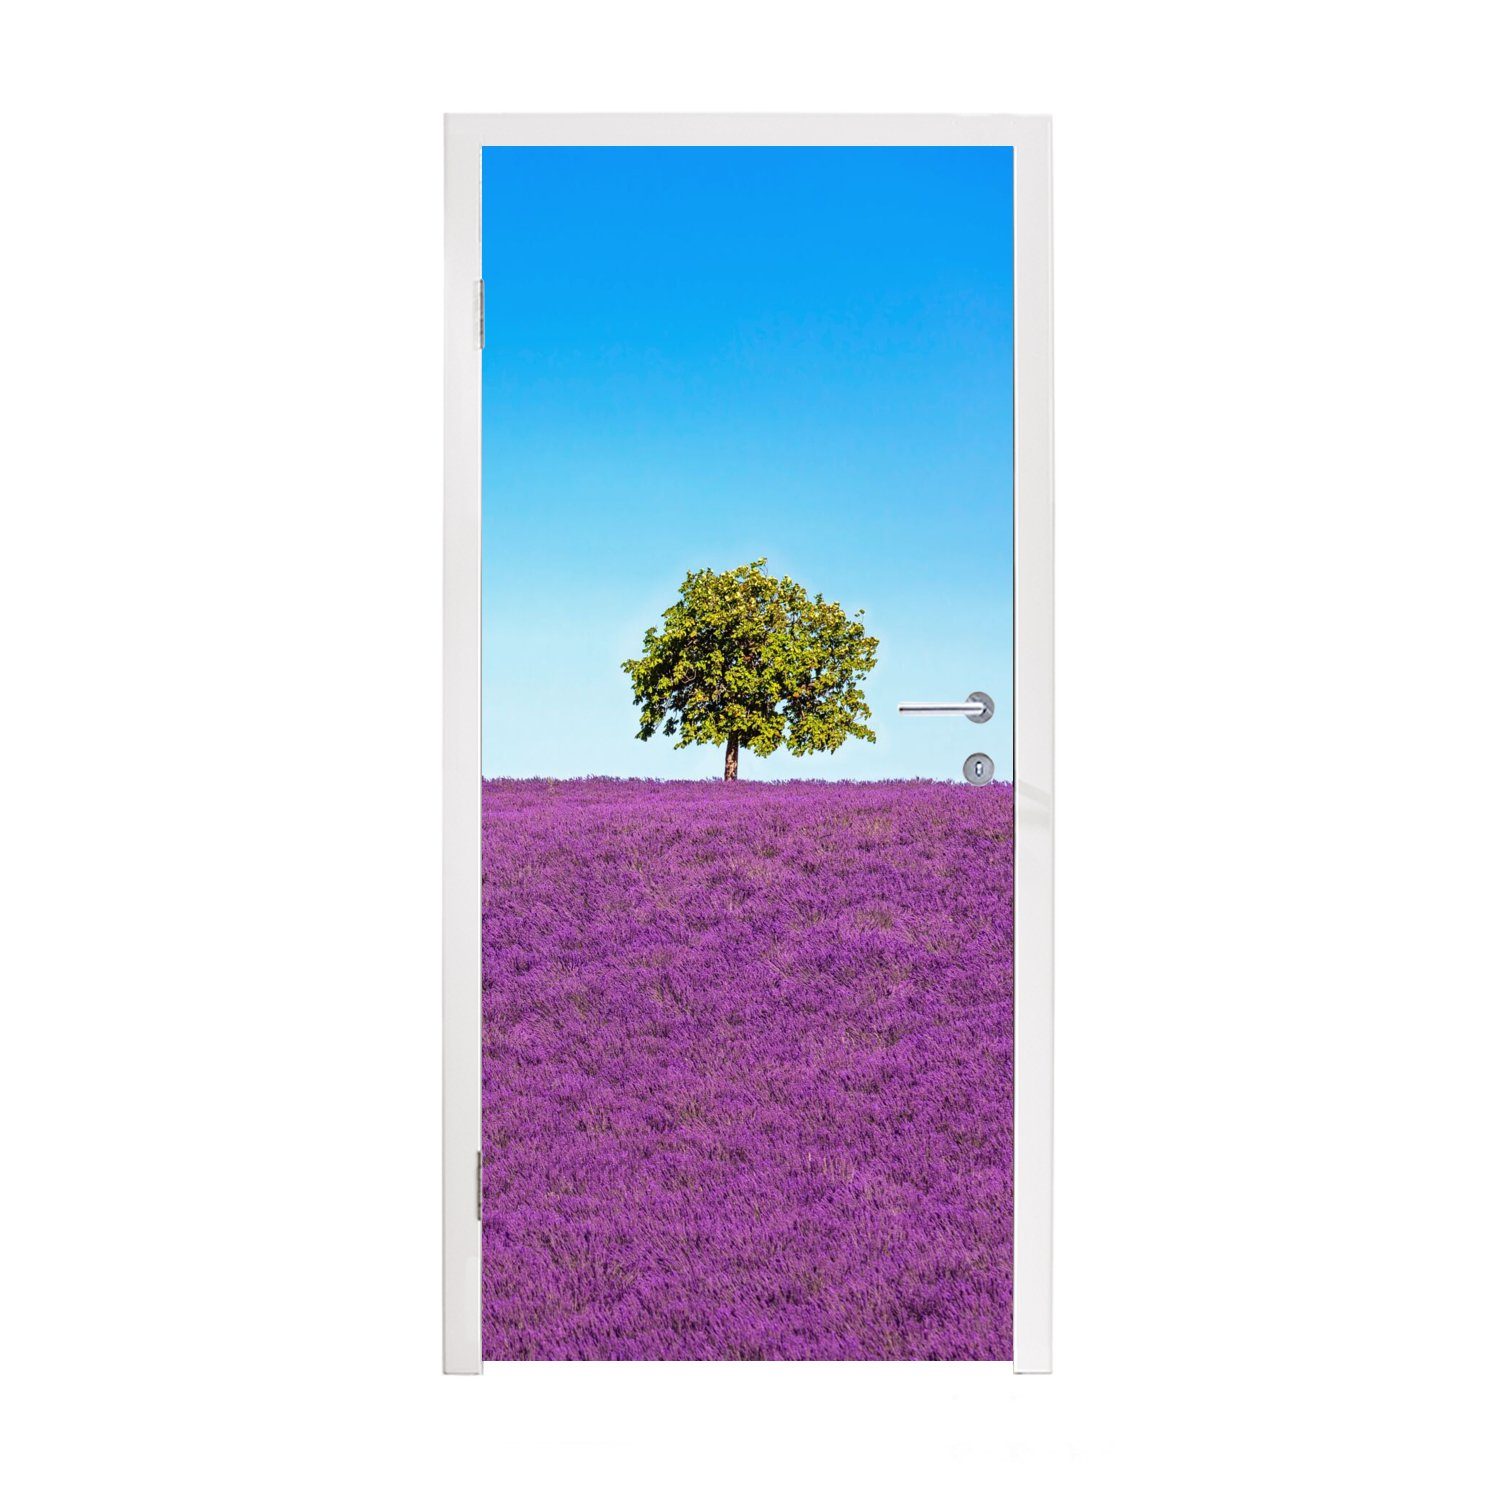 MuchoWow Türtapete Baum - Lila - Himmel - Lavendel, Matt, bedruckt, (1 St), Fototapete für Tür, Türaufkleber, 75x205 cm